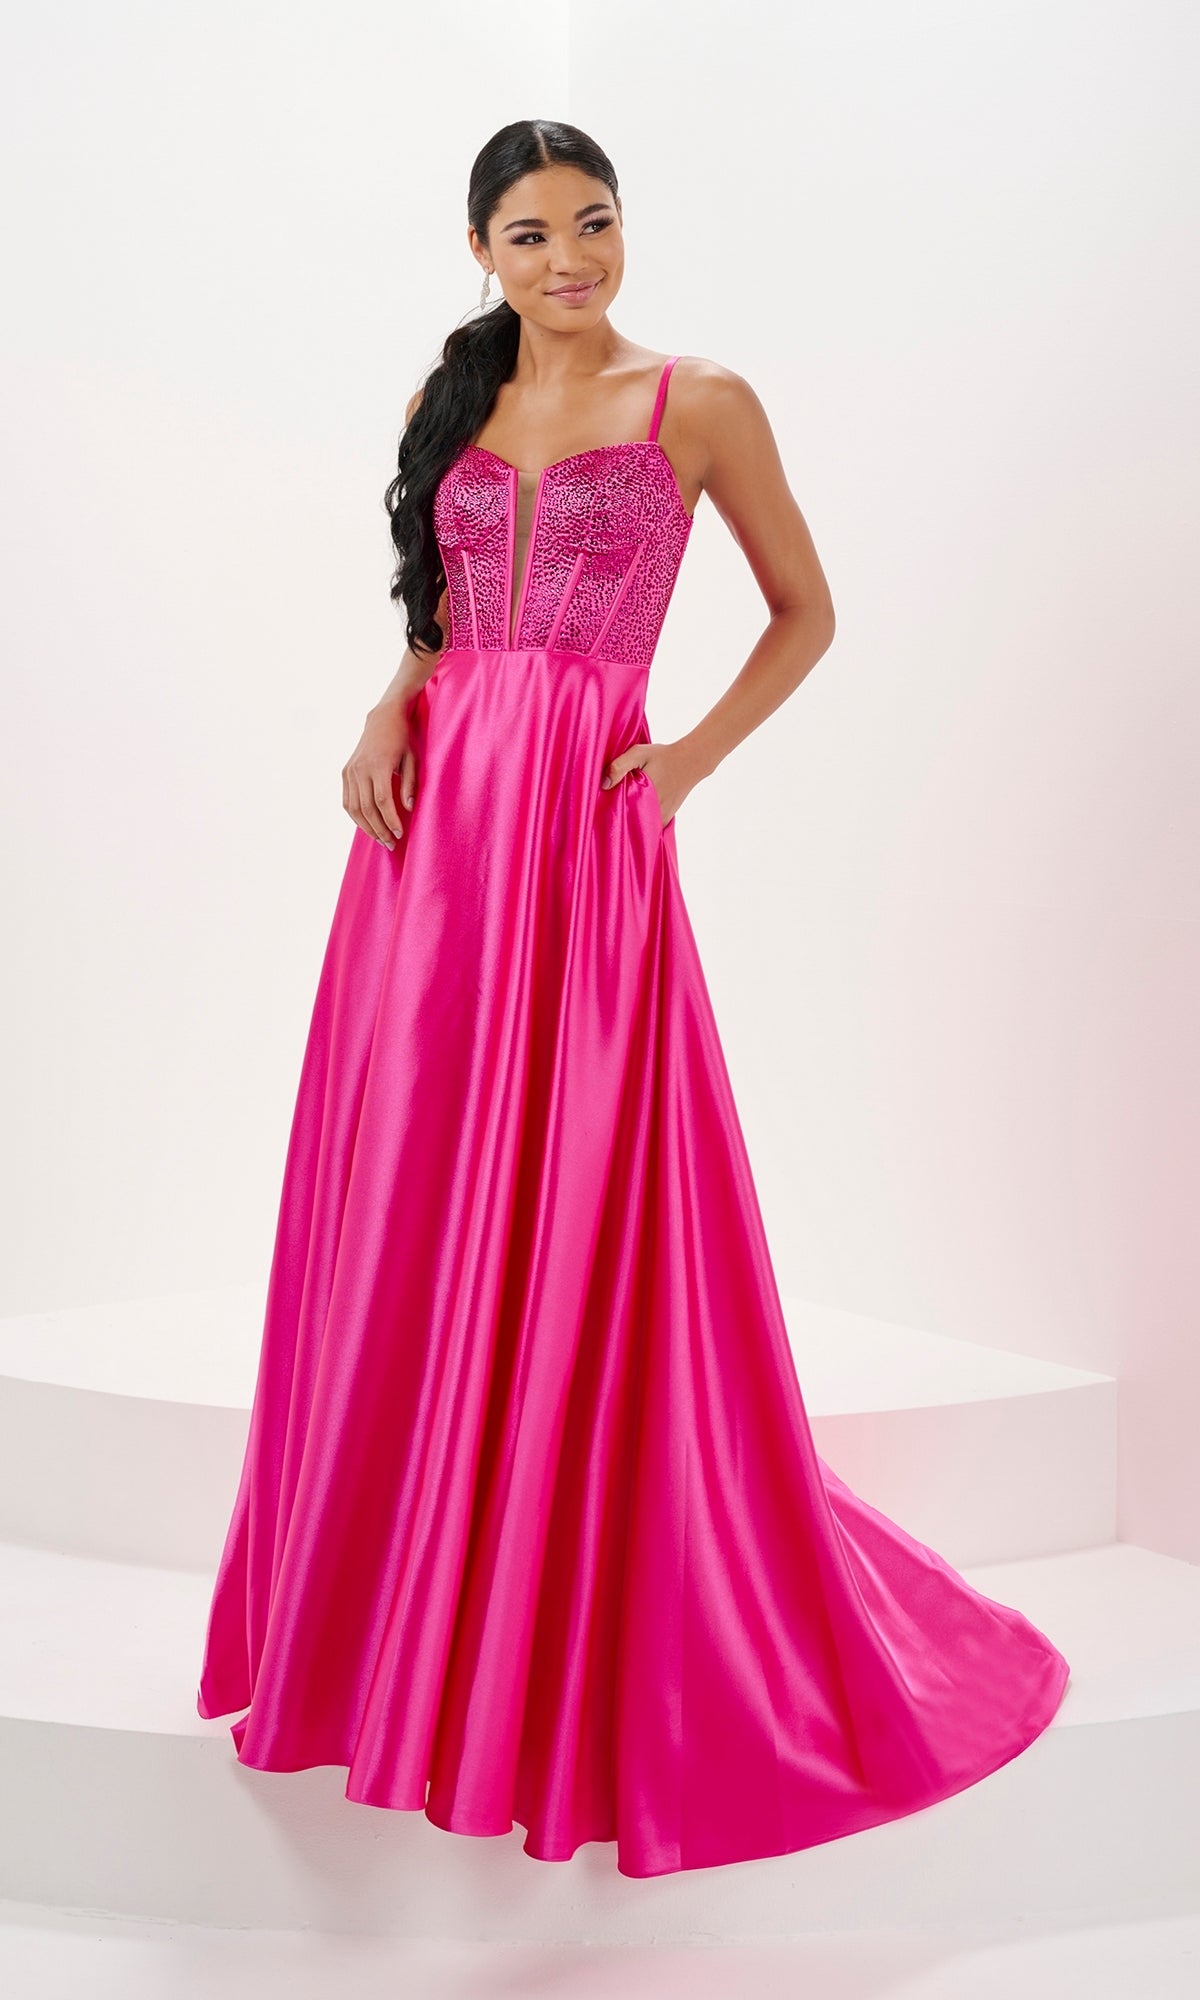 Long Prom Dress 16101 by Tiffany